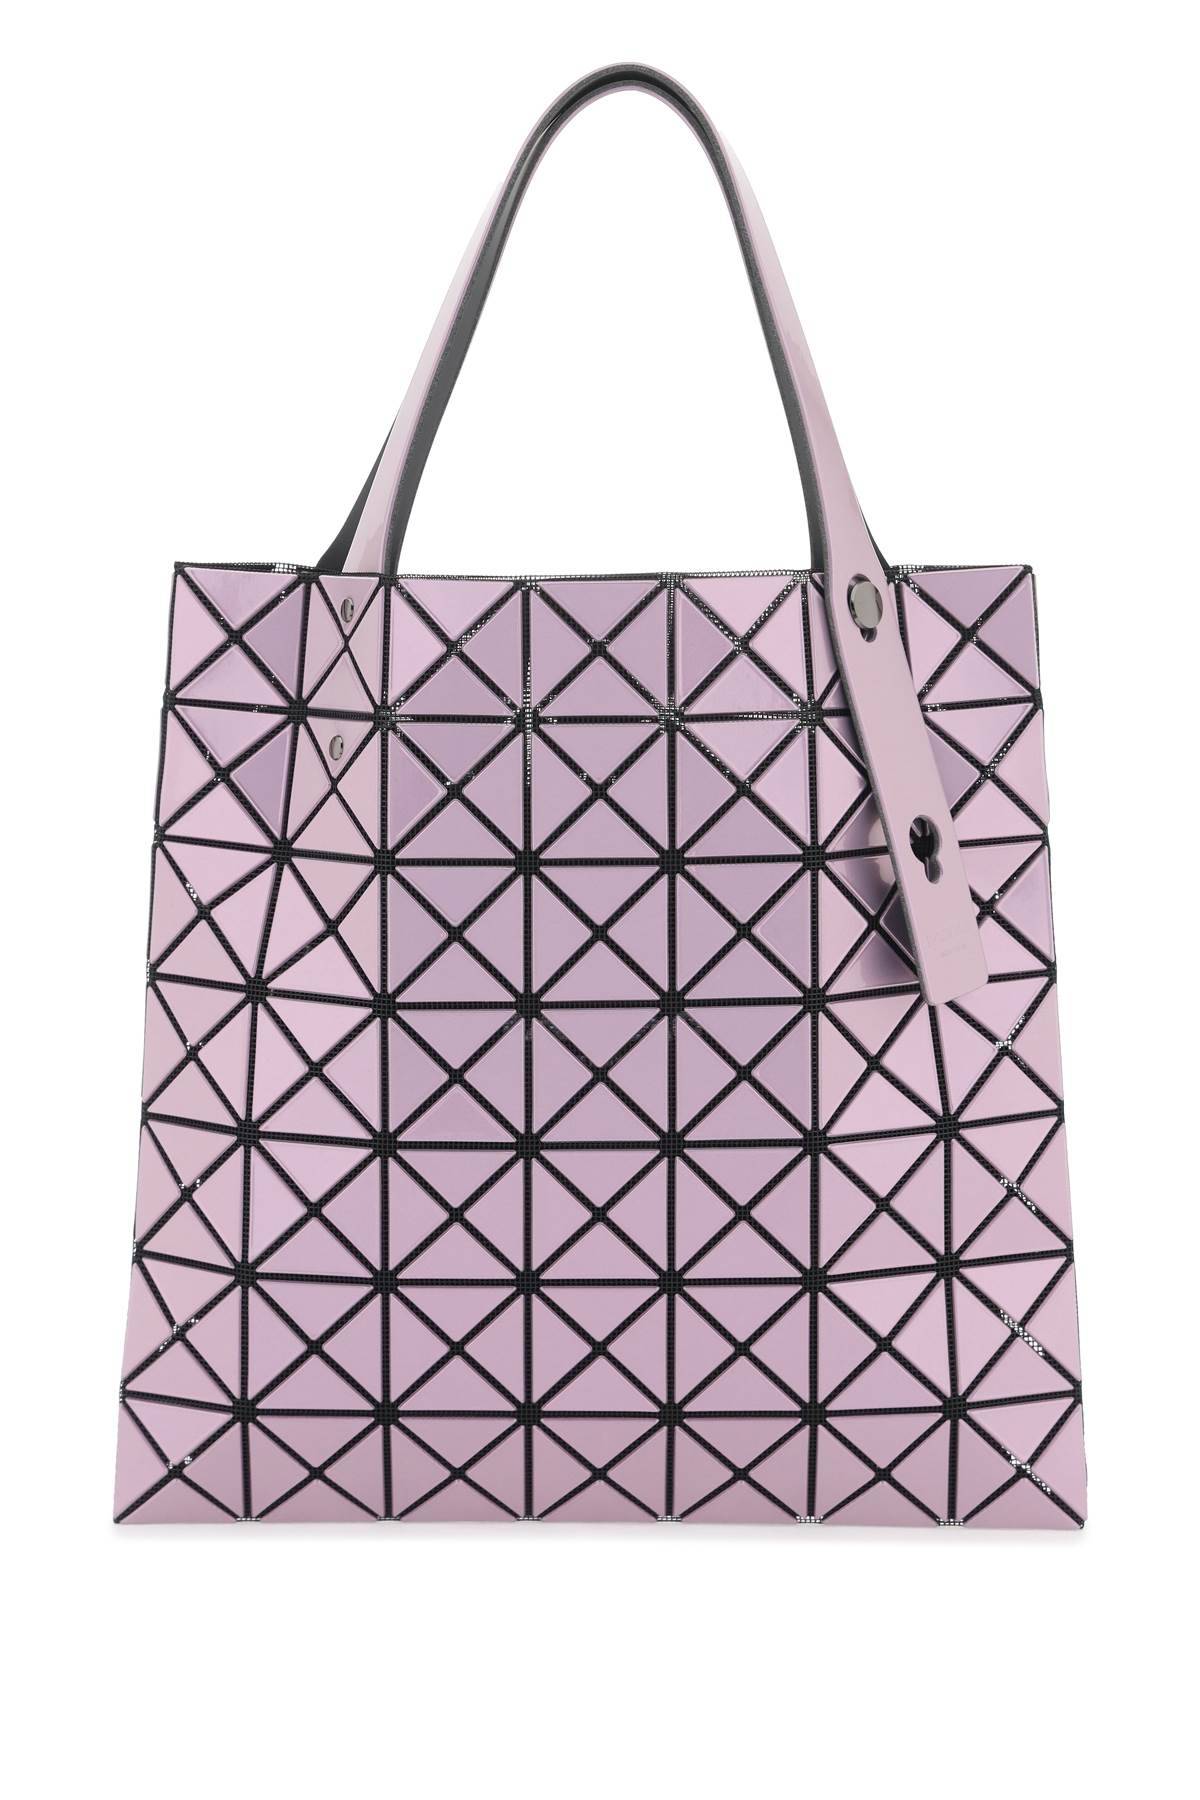 Bao Bao Issey Miyake Prism Small Tote Bag In Metallic,purple